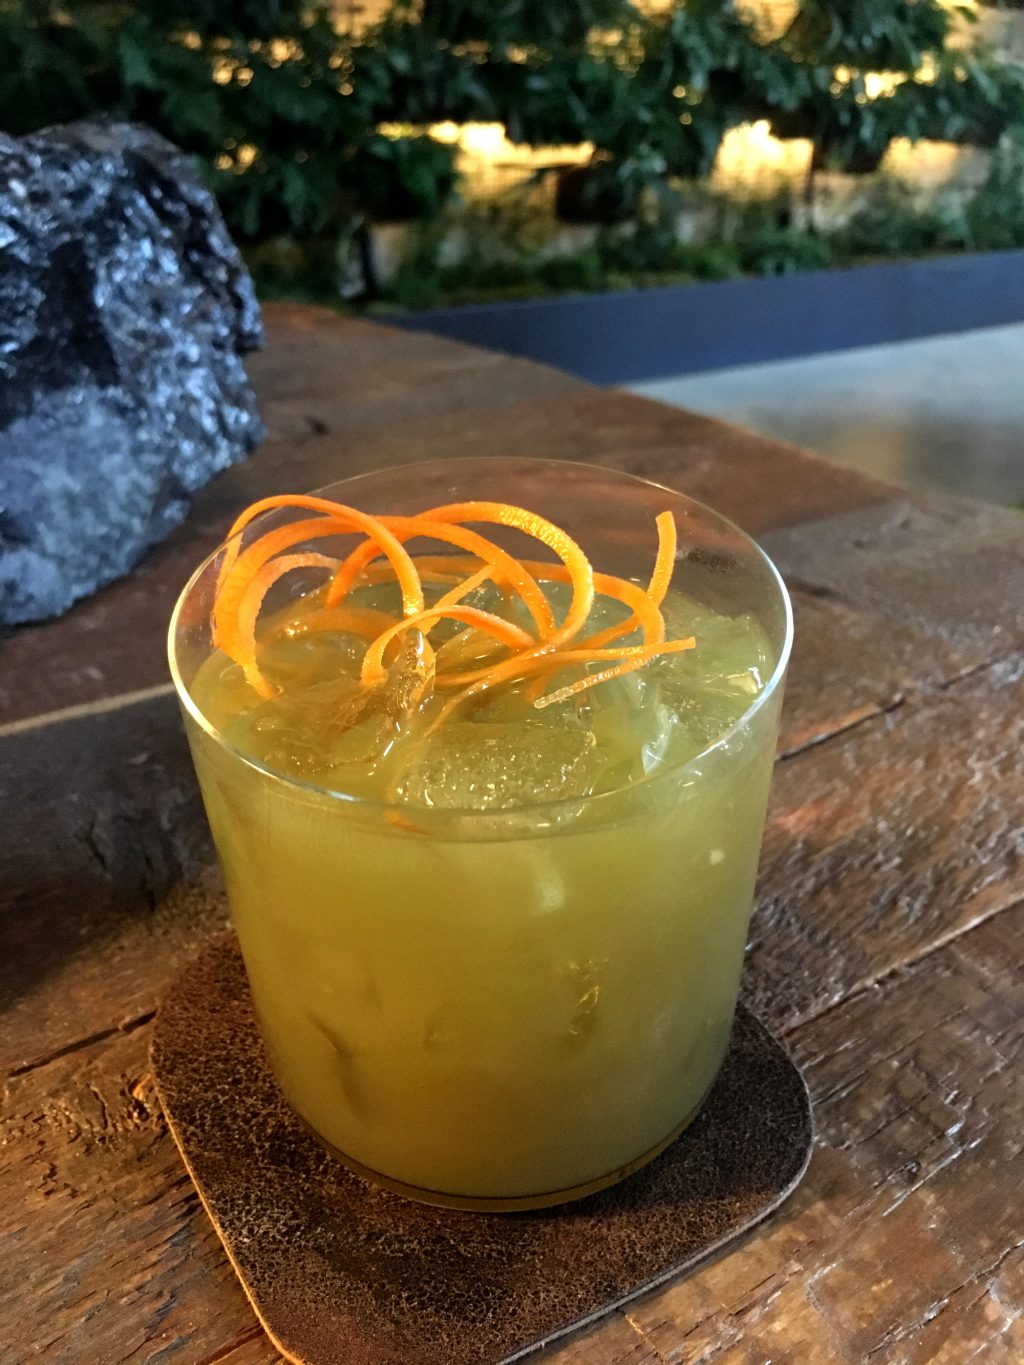 A cocktail garnished with orange peel spirals